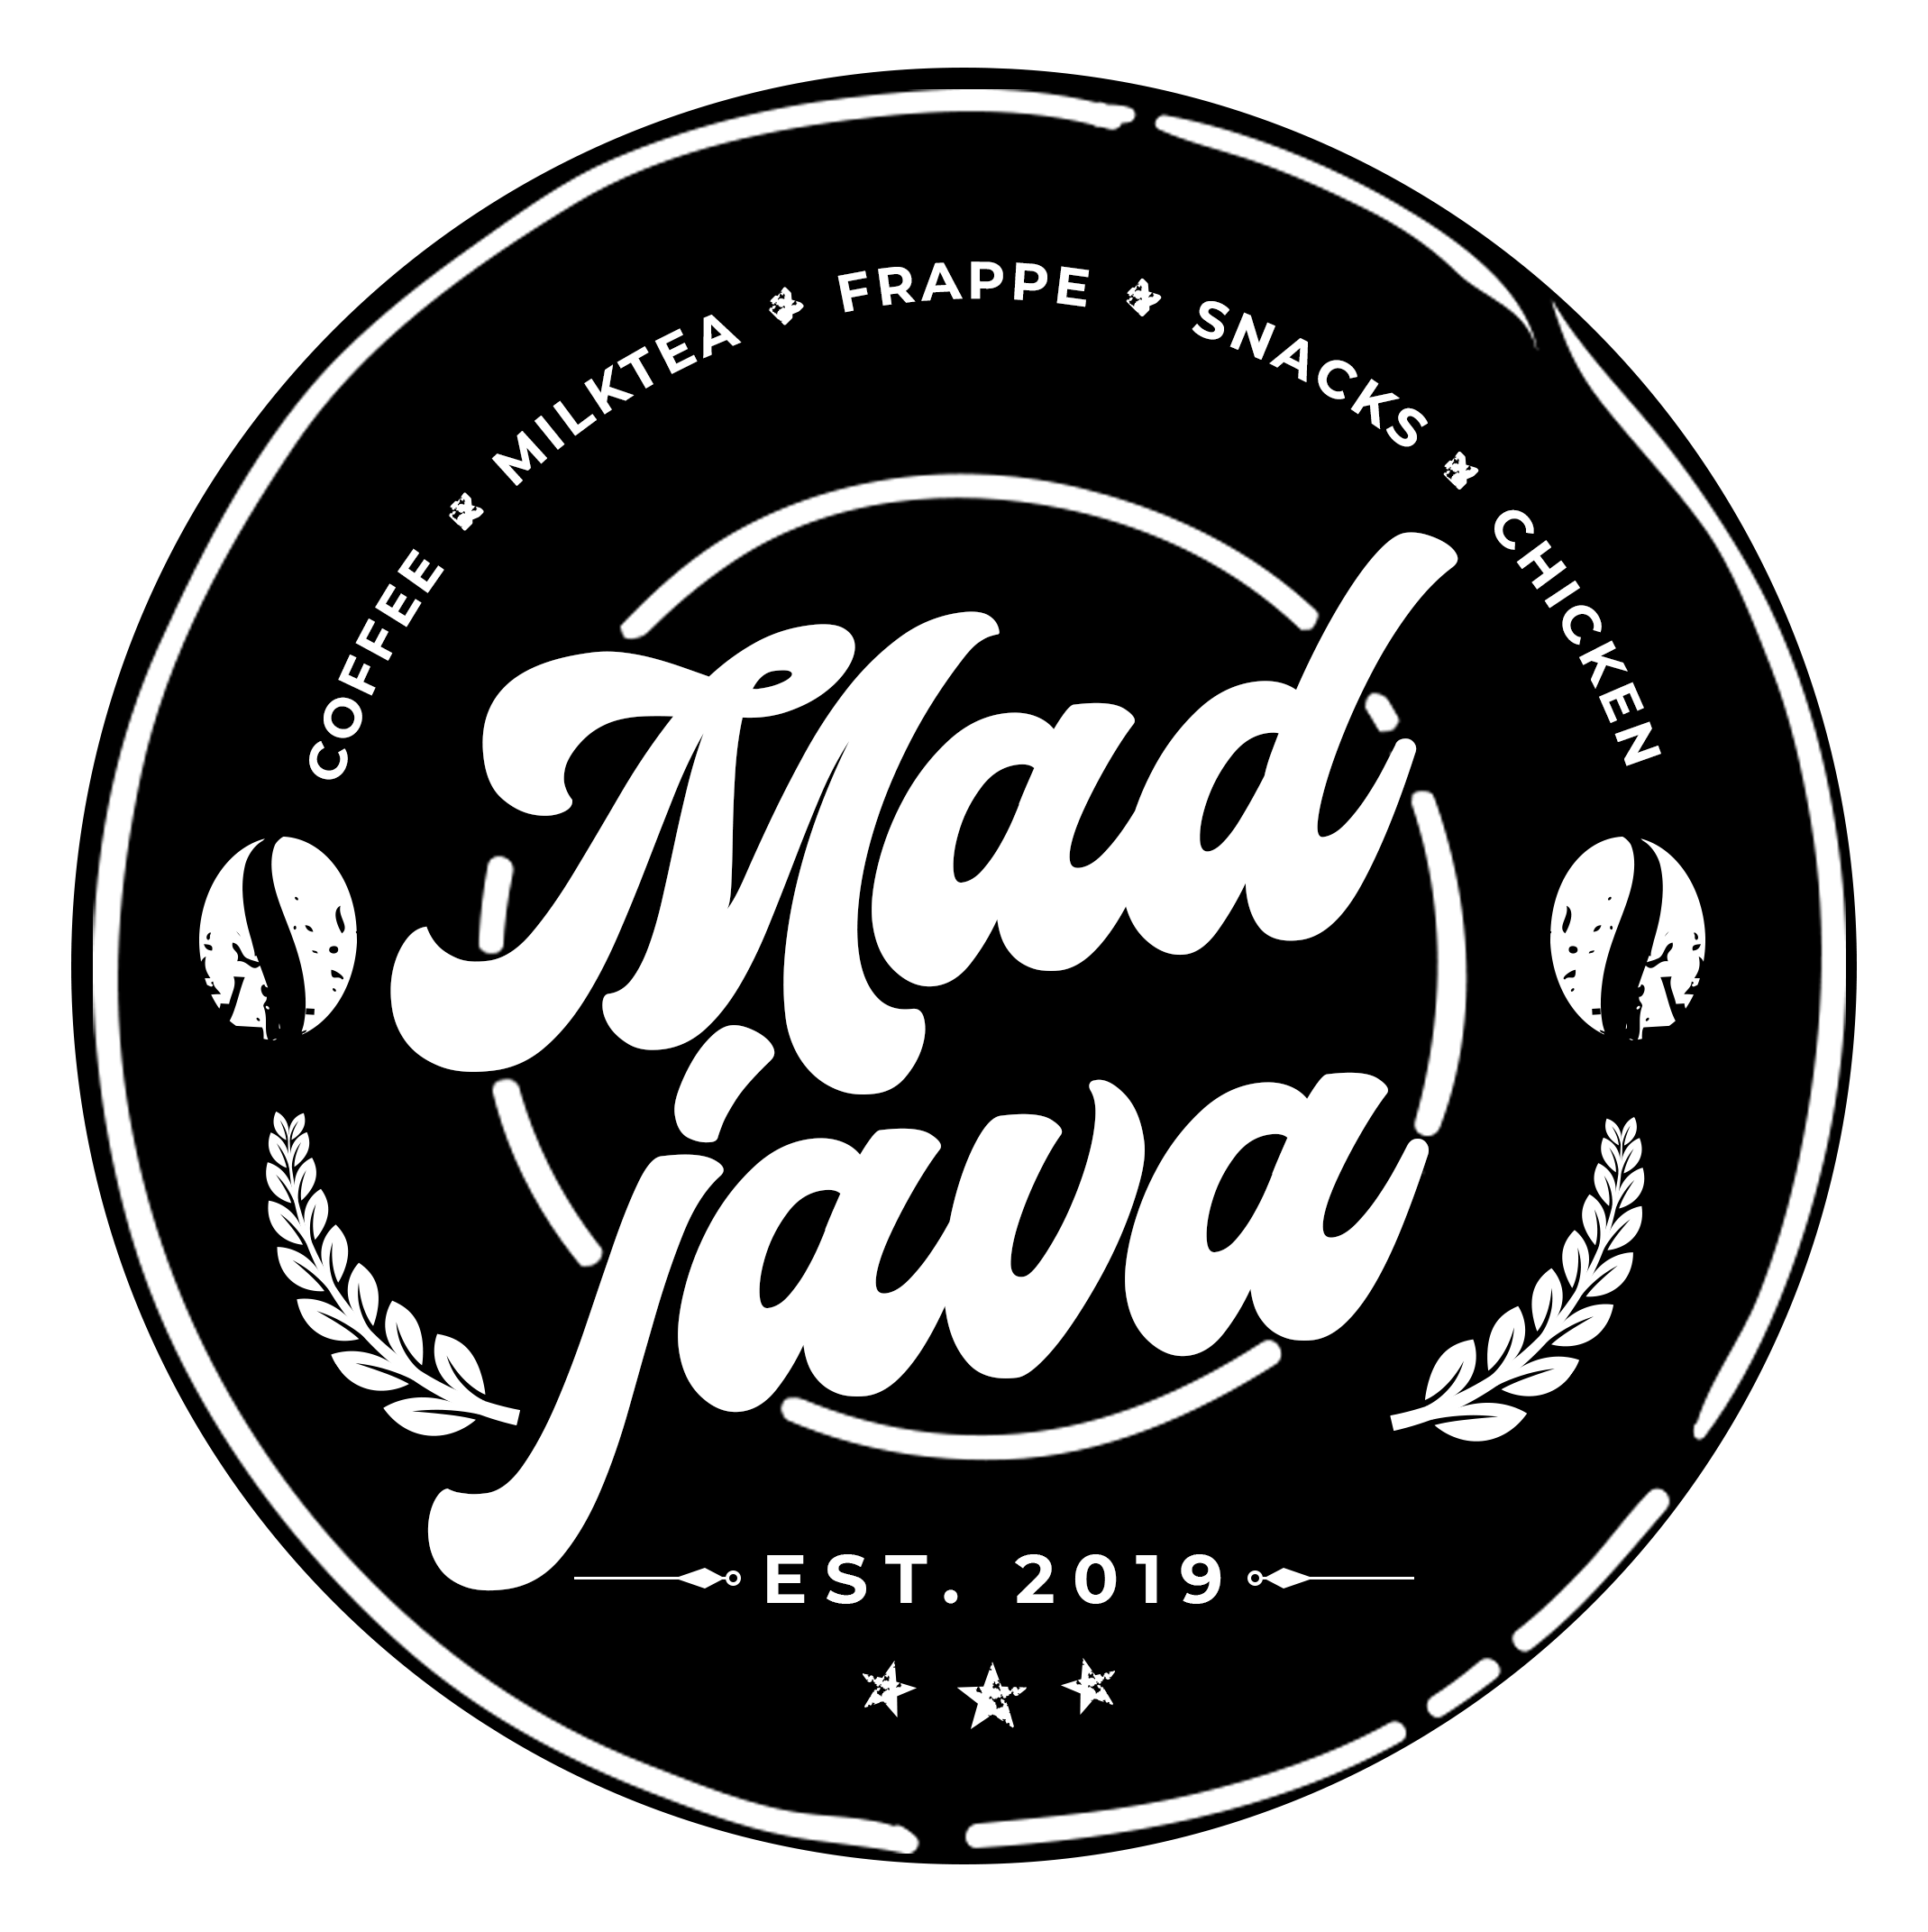 Mad Java Cafe